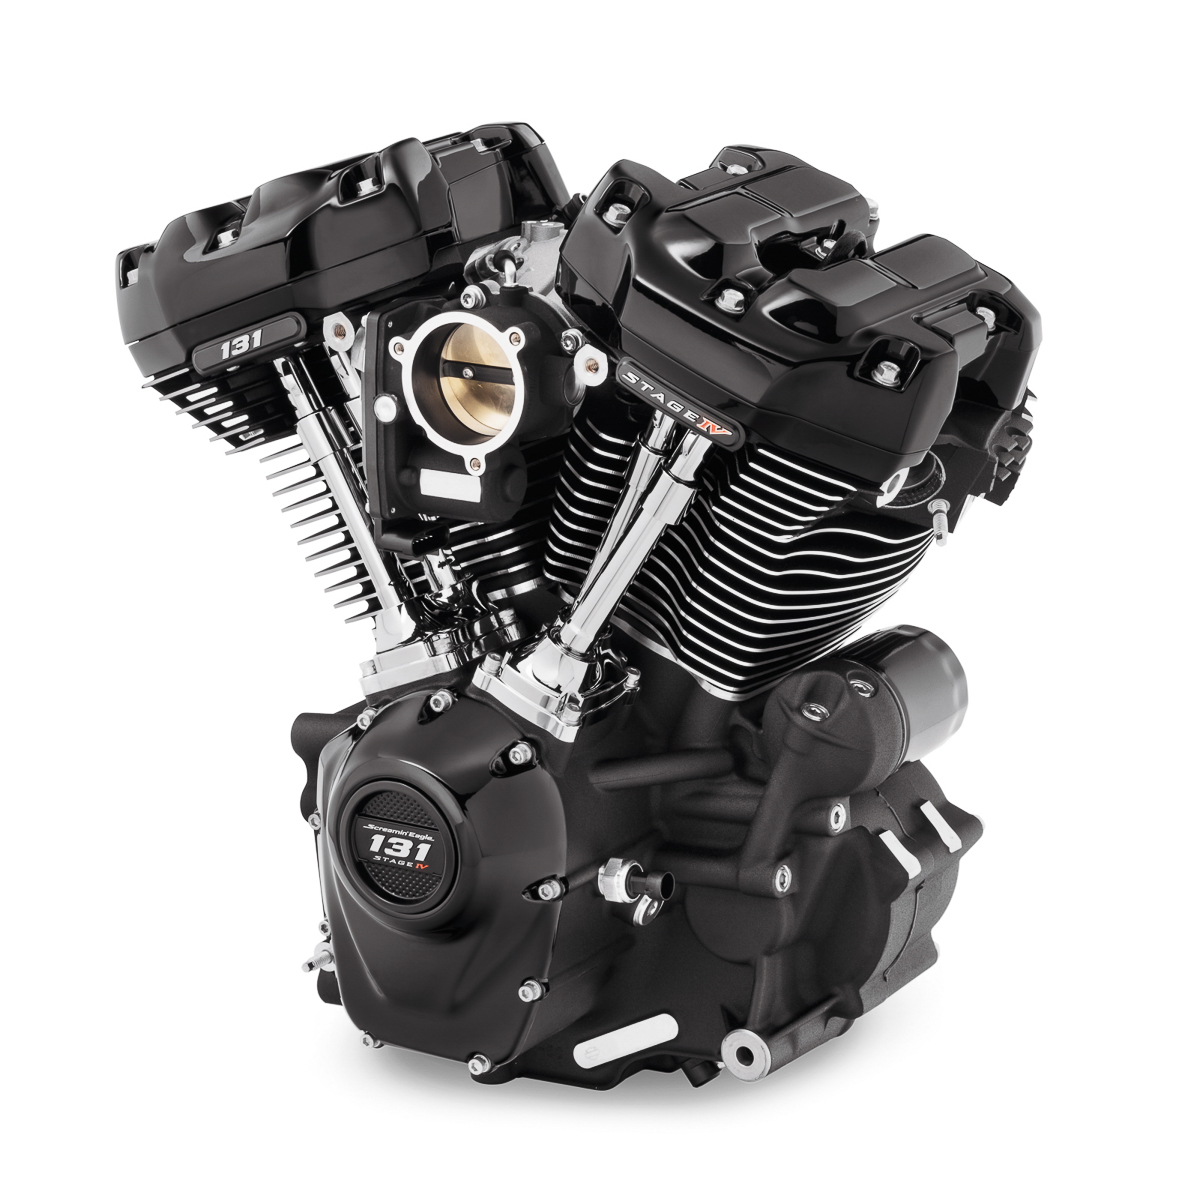 Harley-Davidson unveils 2,147cc engine! - Motorcycle news, Motorcycle ...